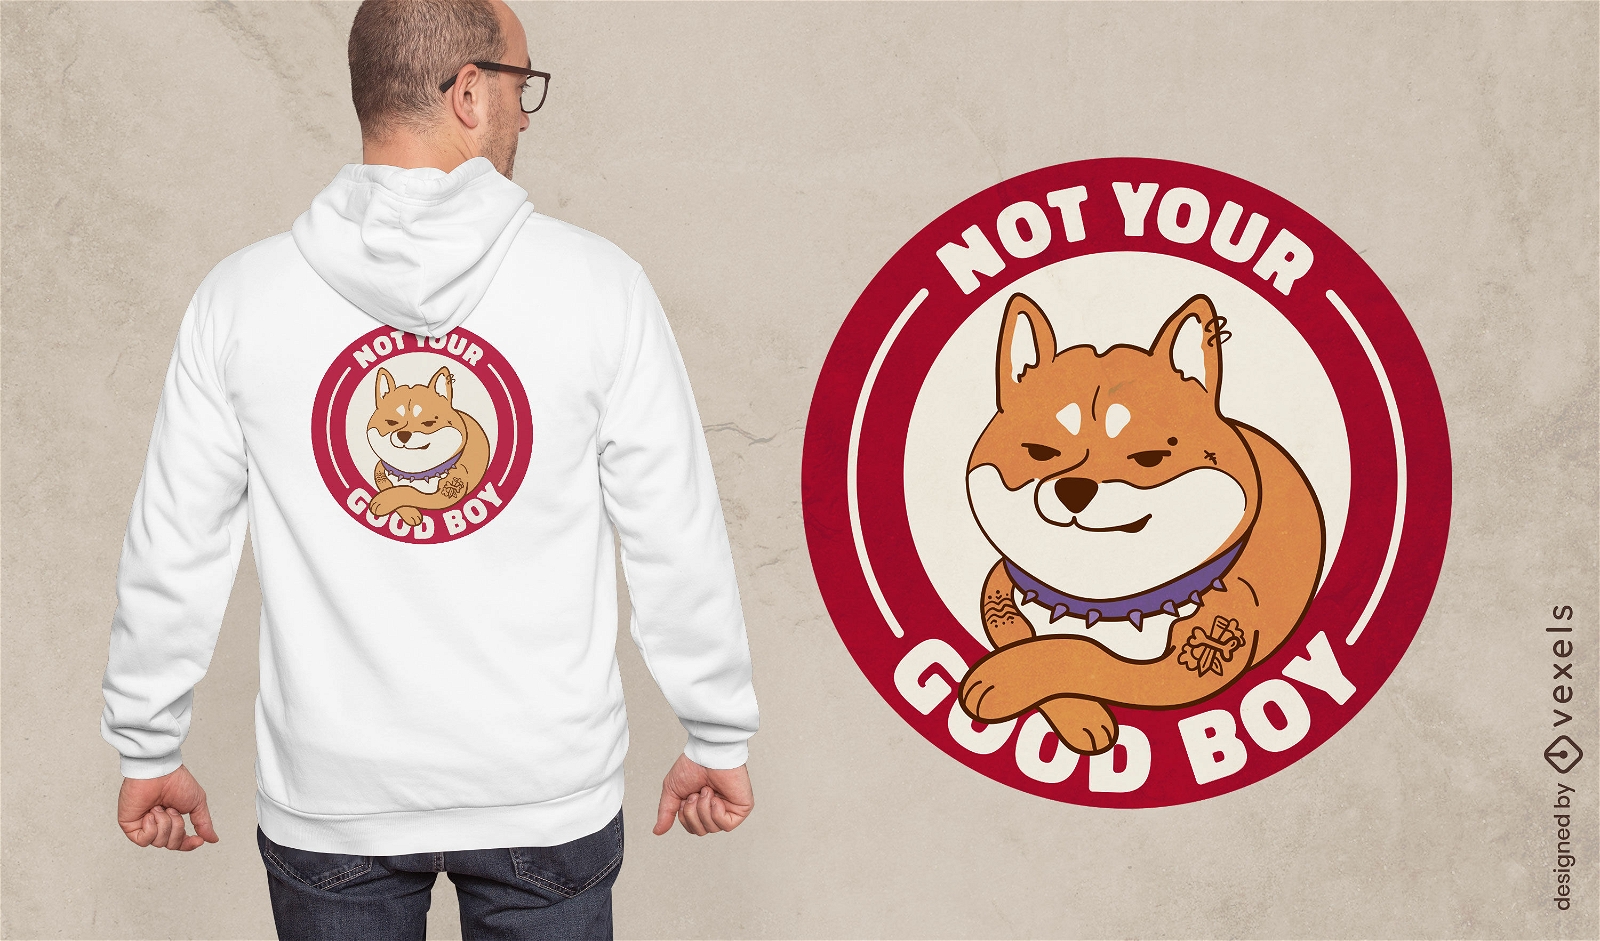 Not your good boy funny dog t-shirt design